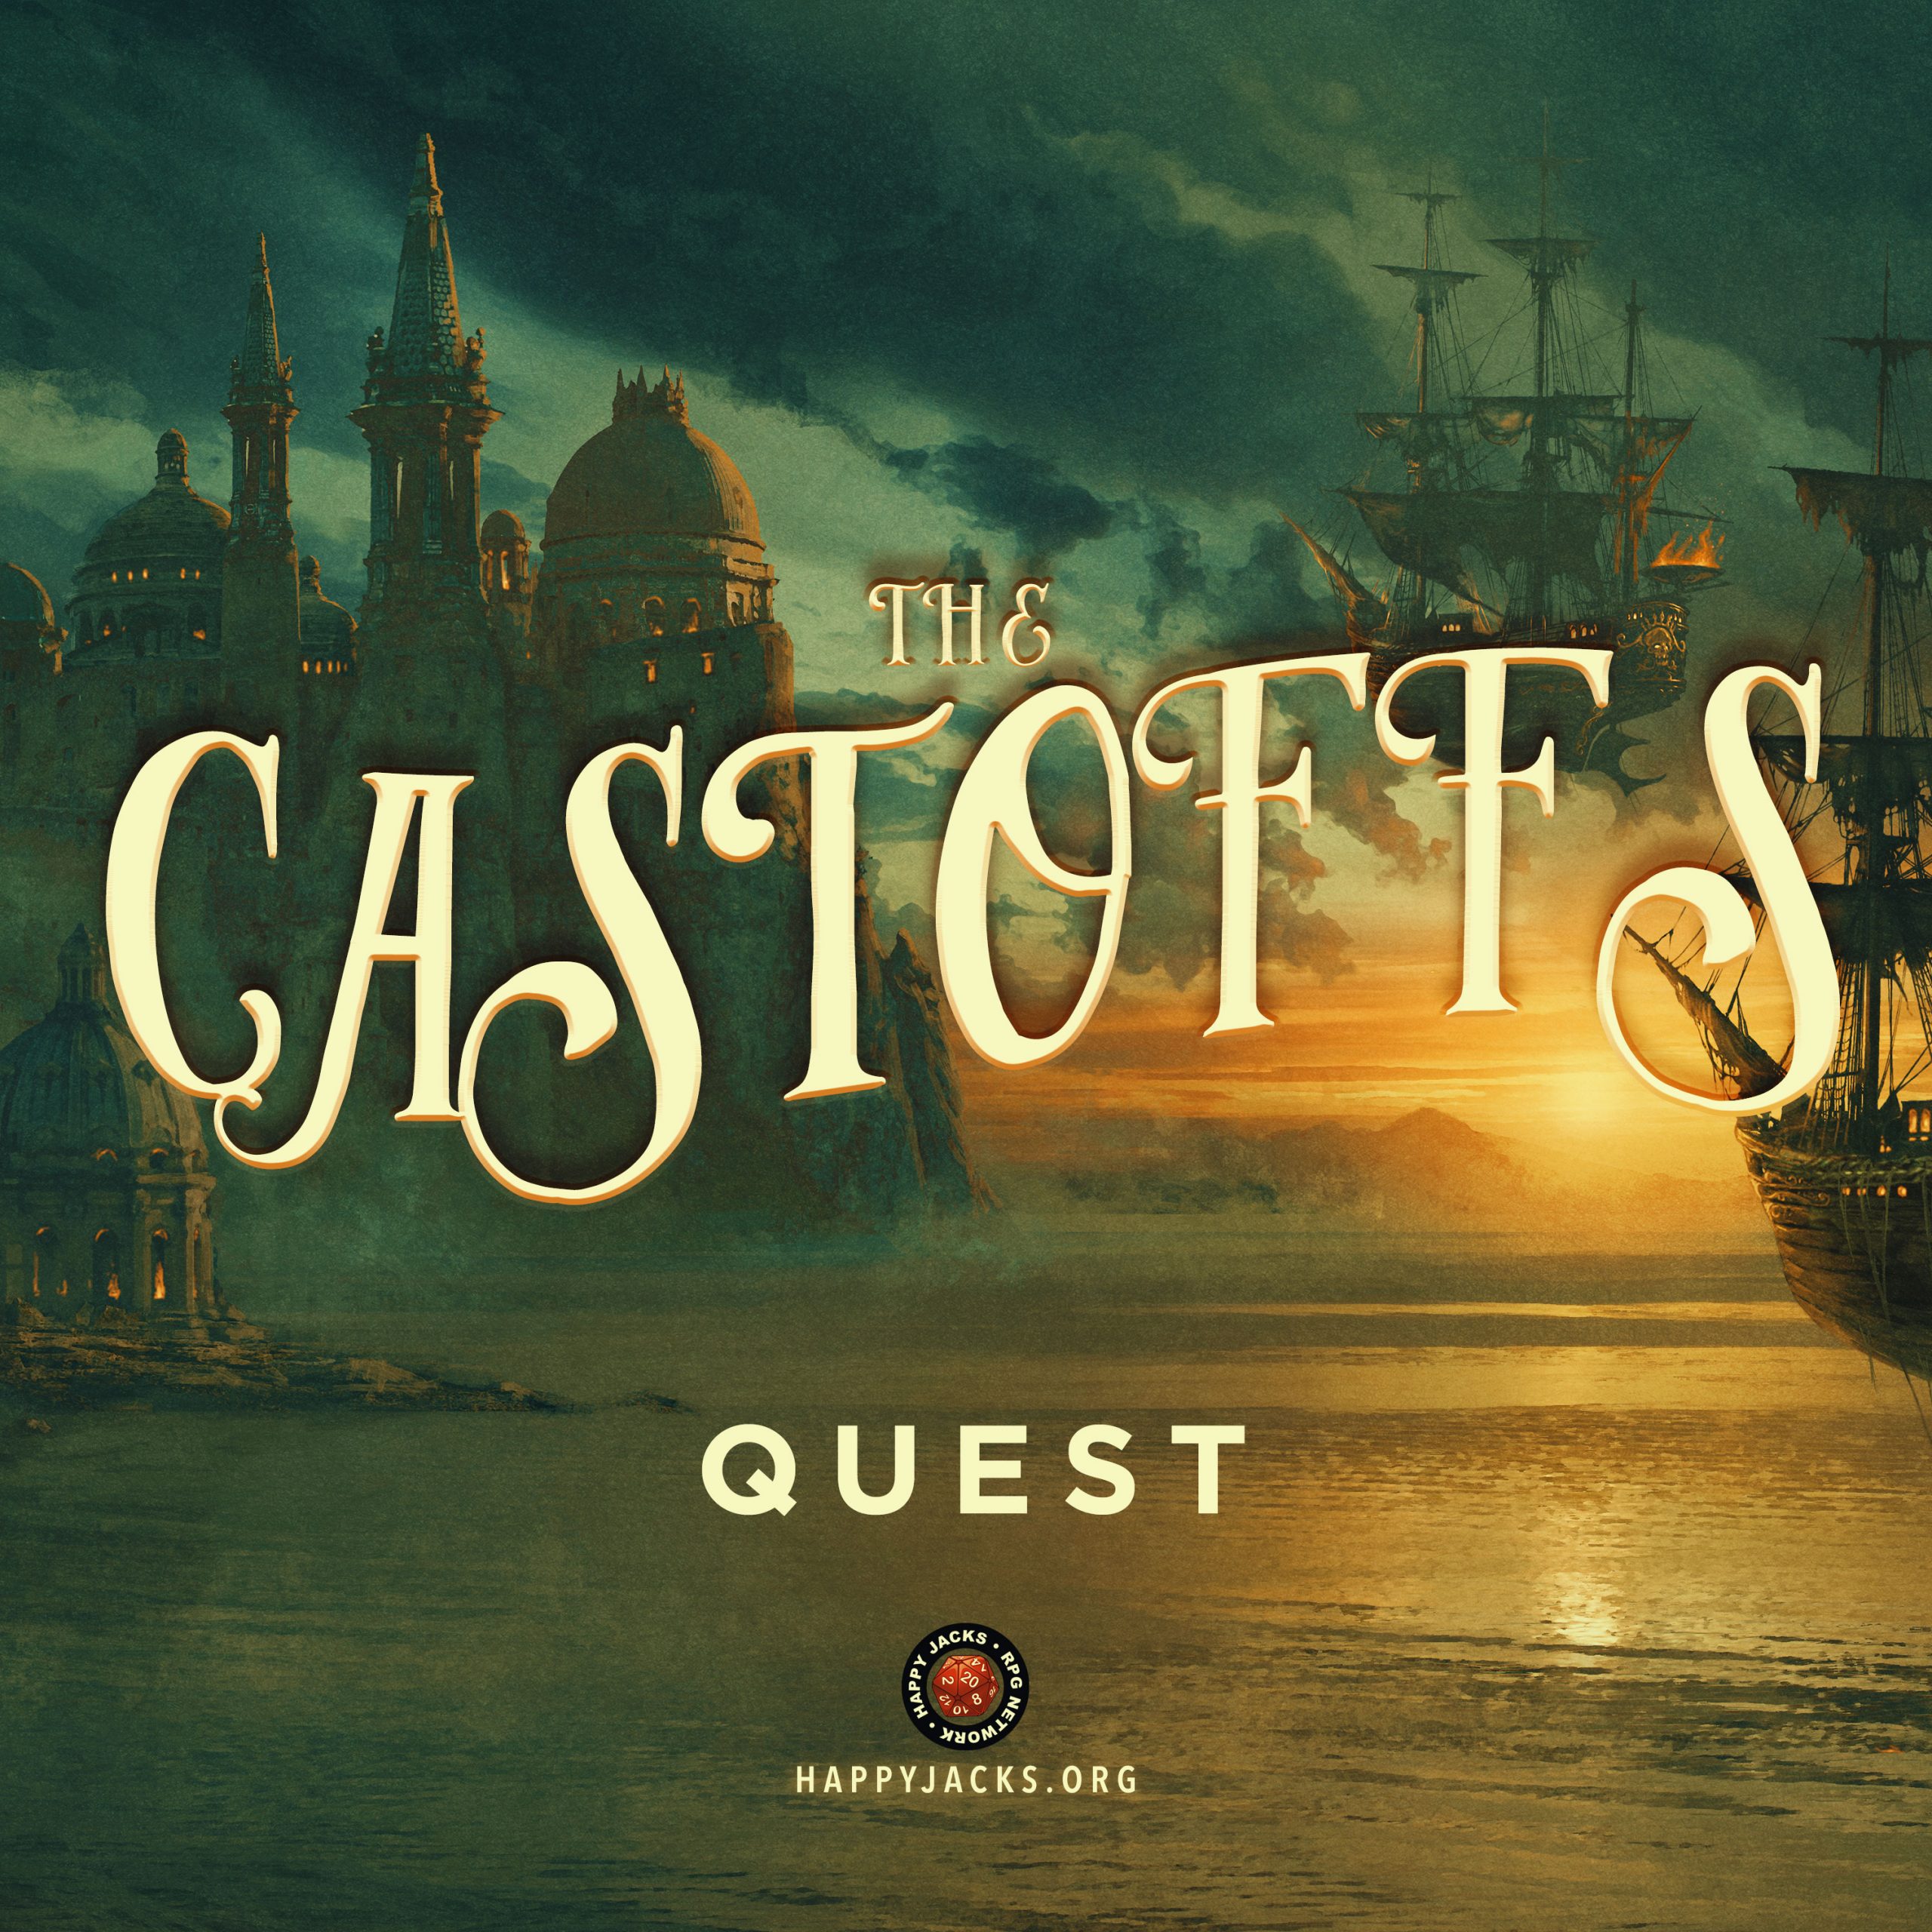 CAST09 Portals | The Castoffs | Quest RPG